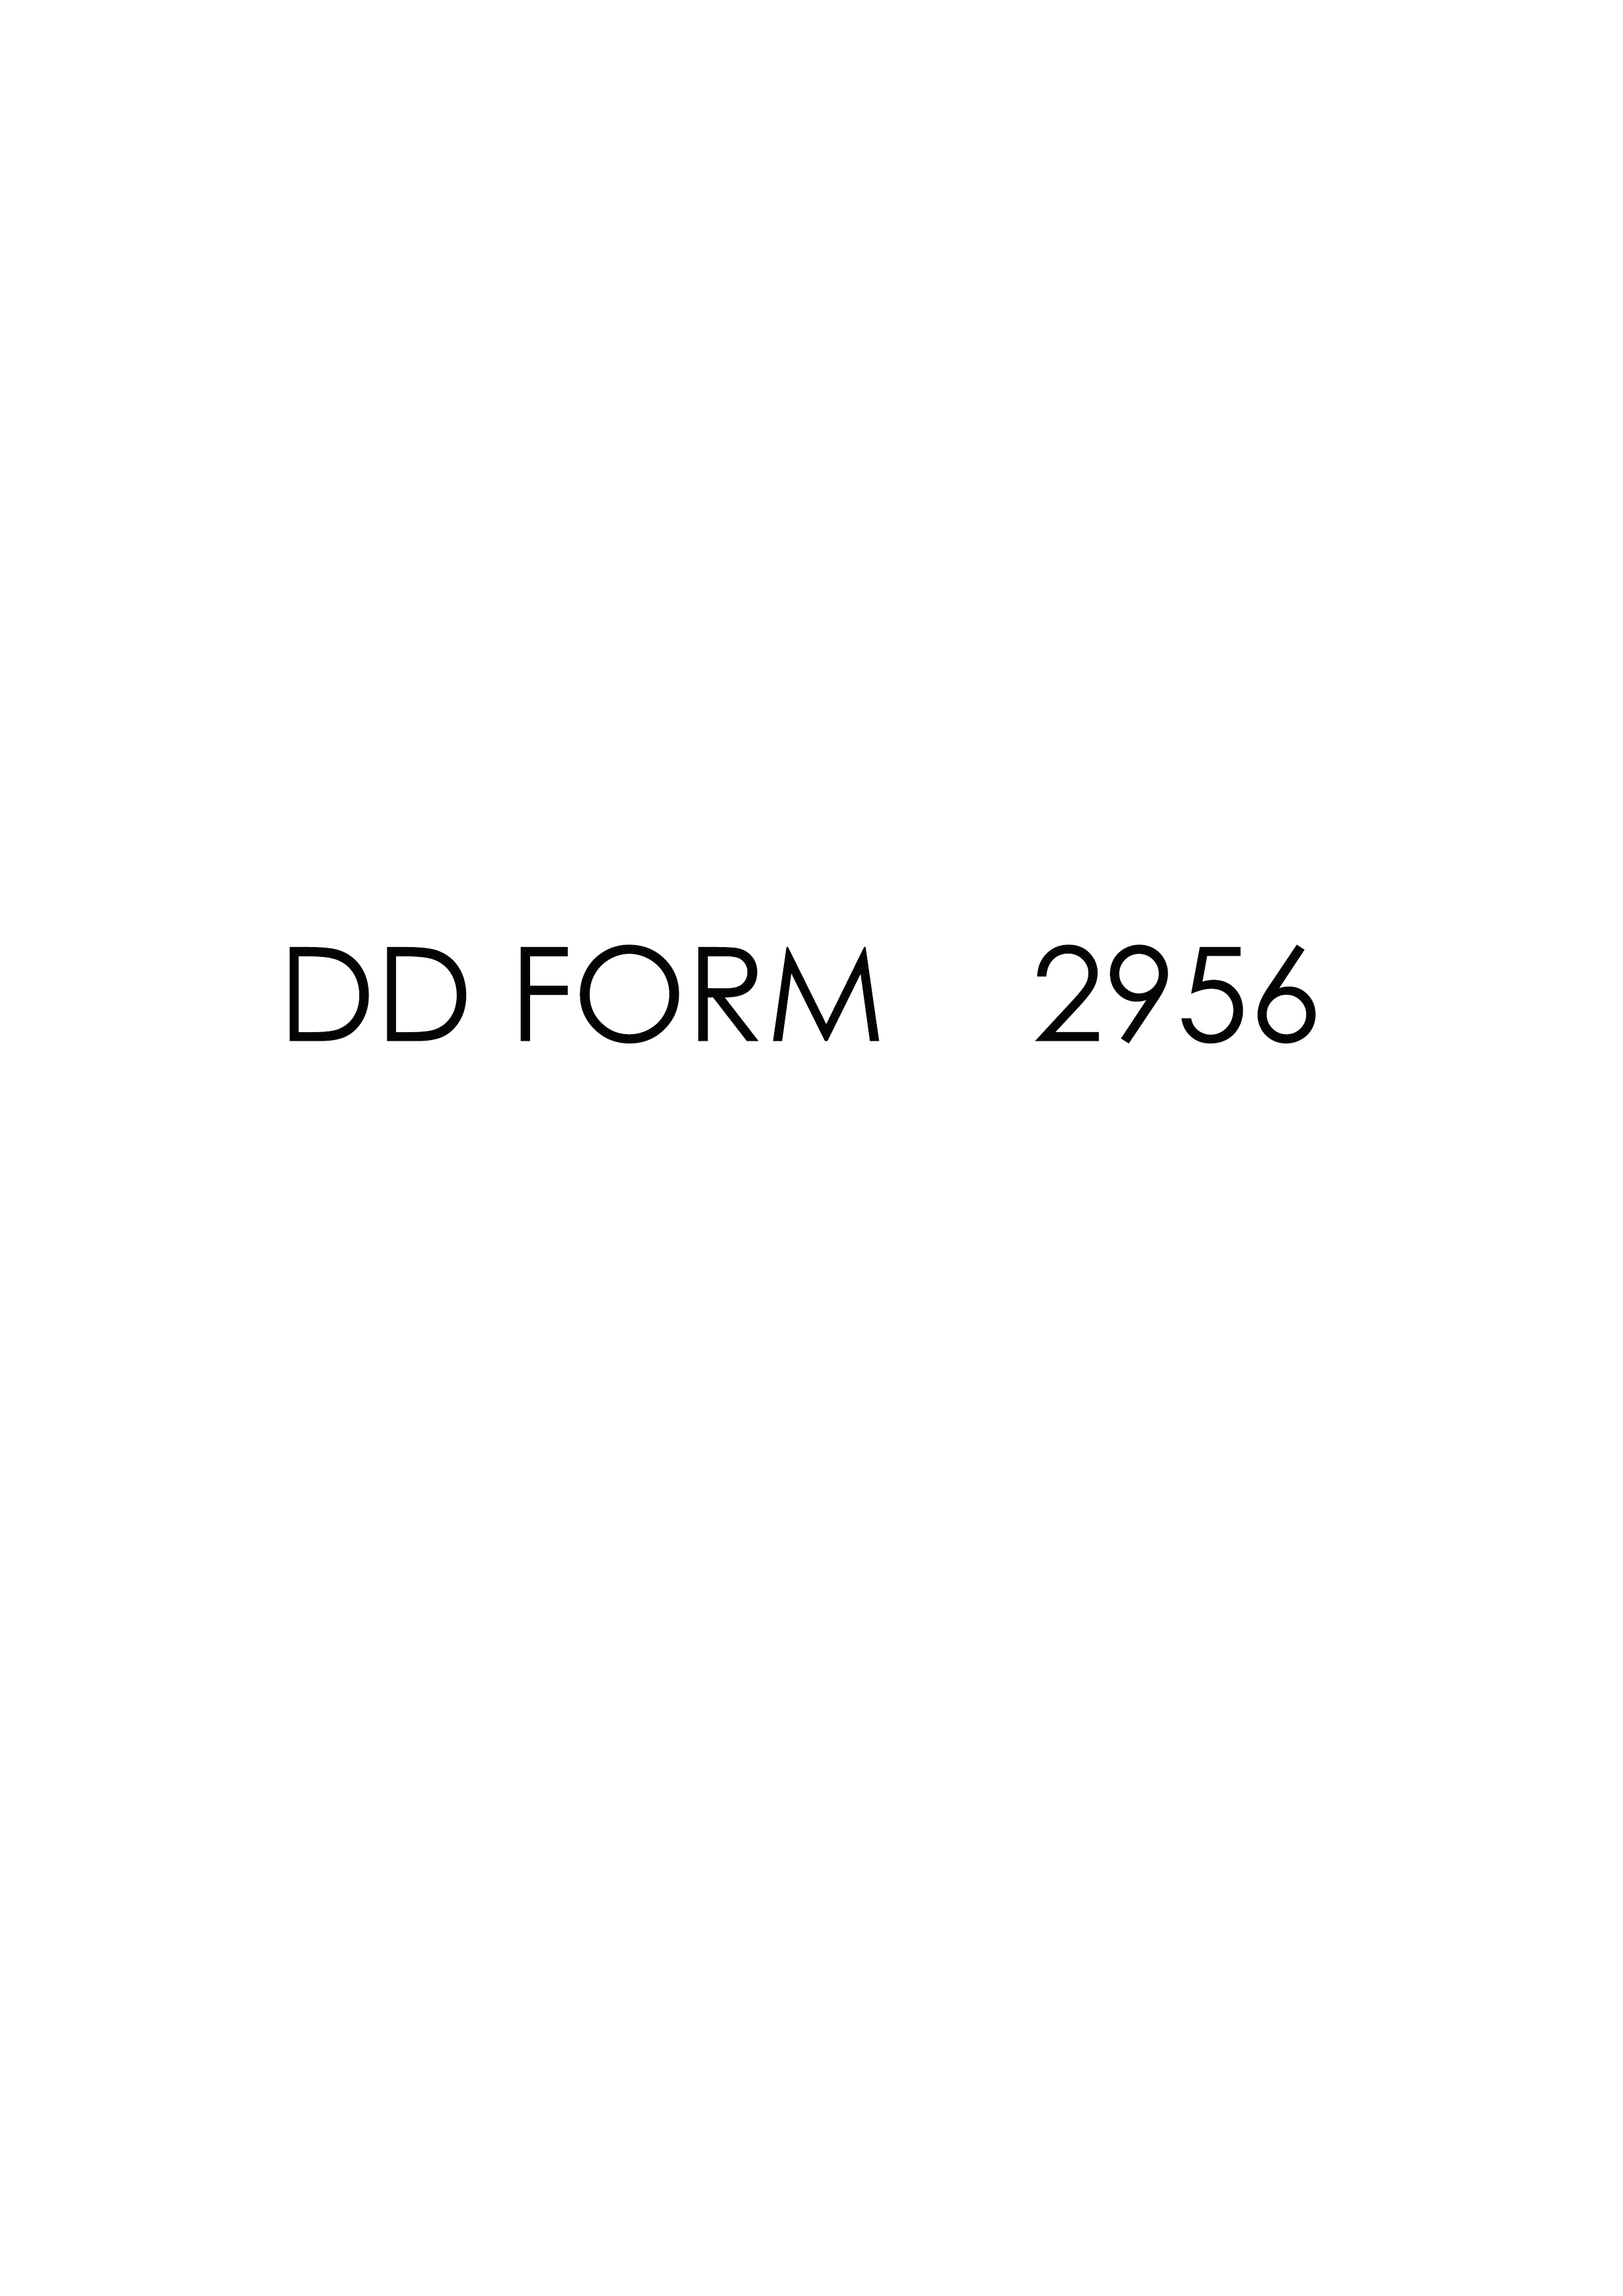 Download dd form 2956